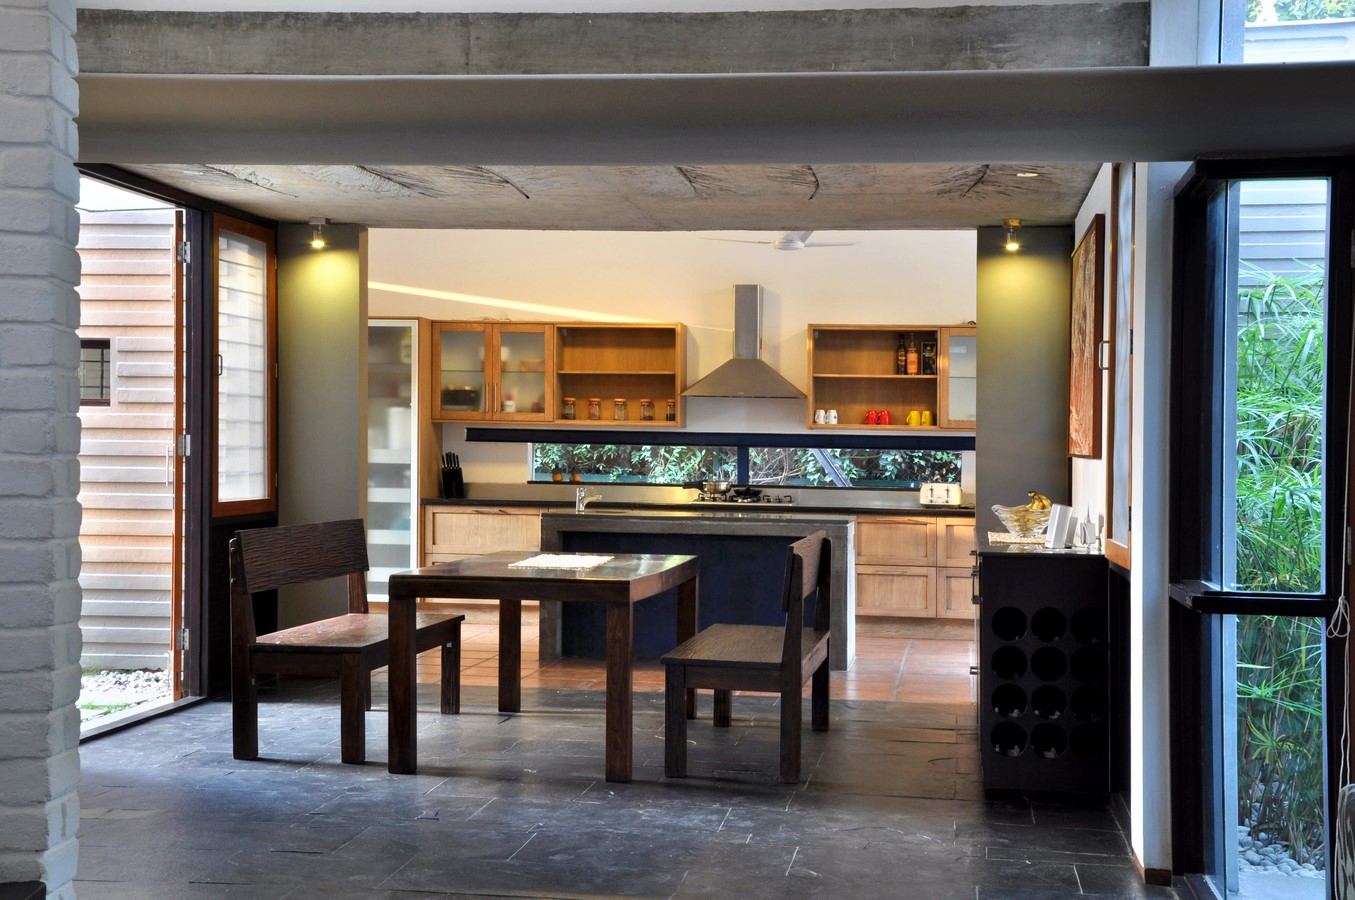 Raymond Shaw Residence By Livingform Architects - Sheet4